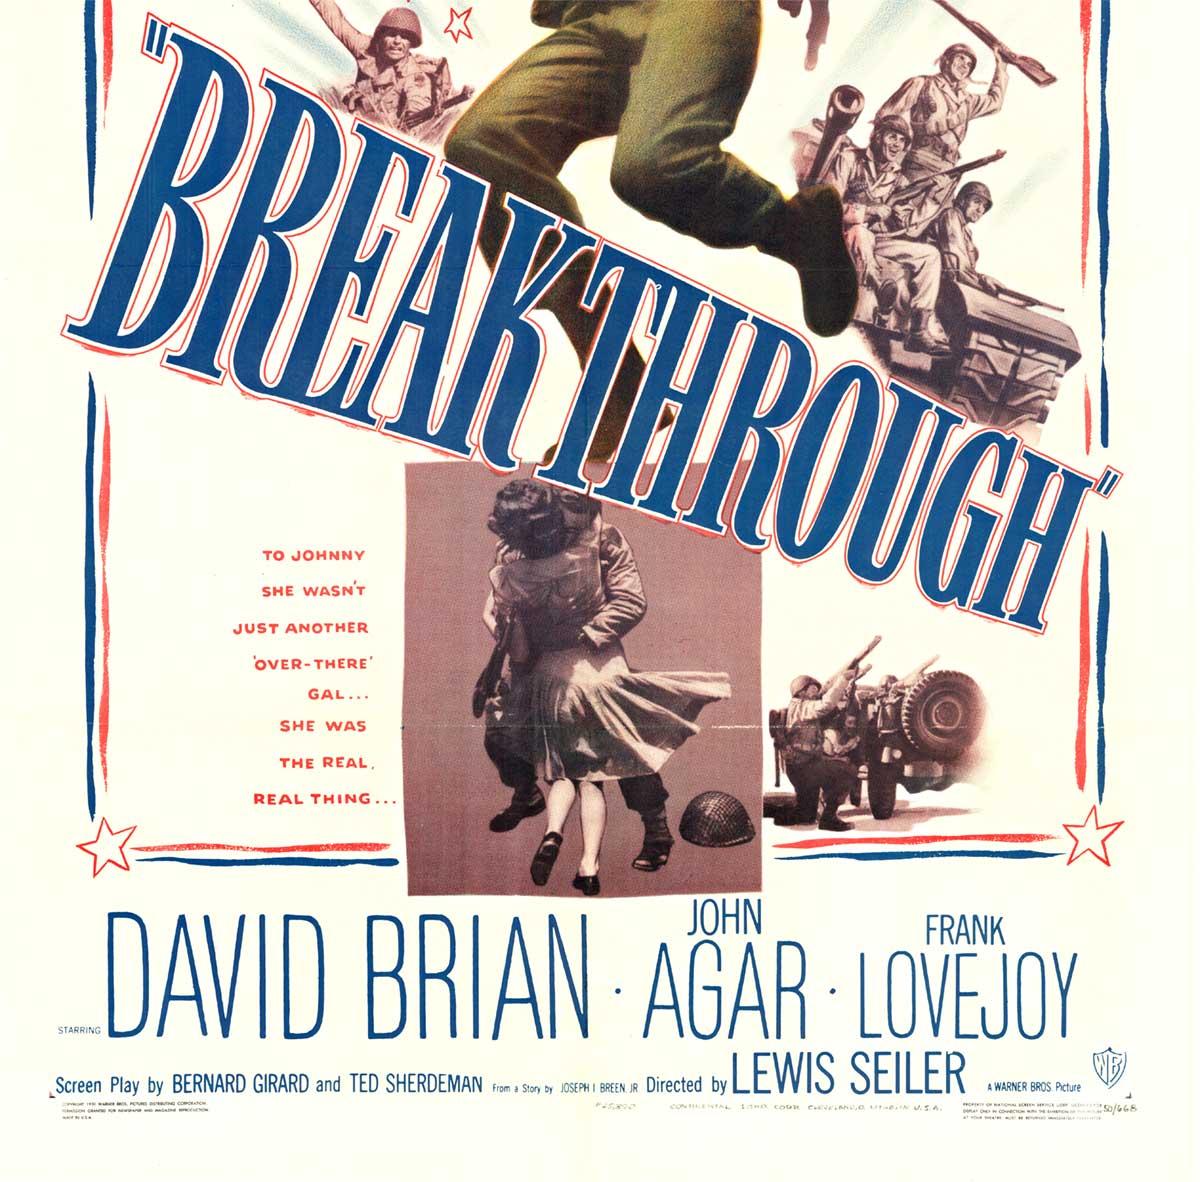 Original Break Through, US 1 sheet movie poster, linen backed - American Modern Print by Unknown